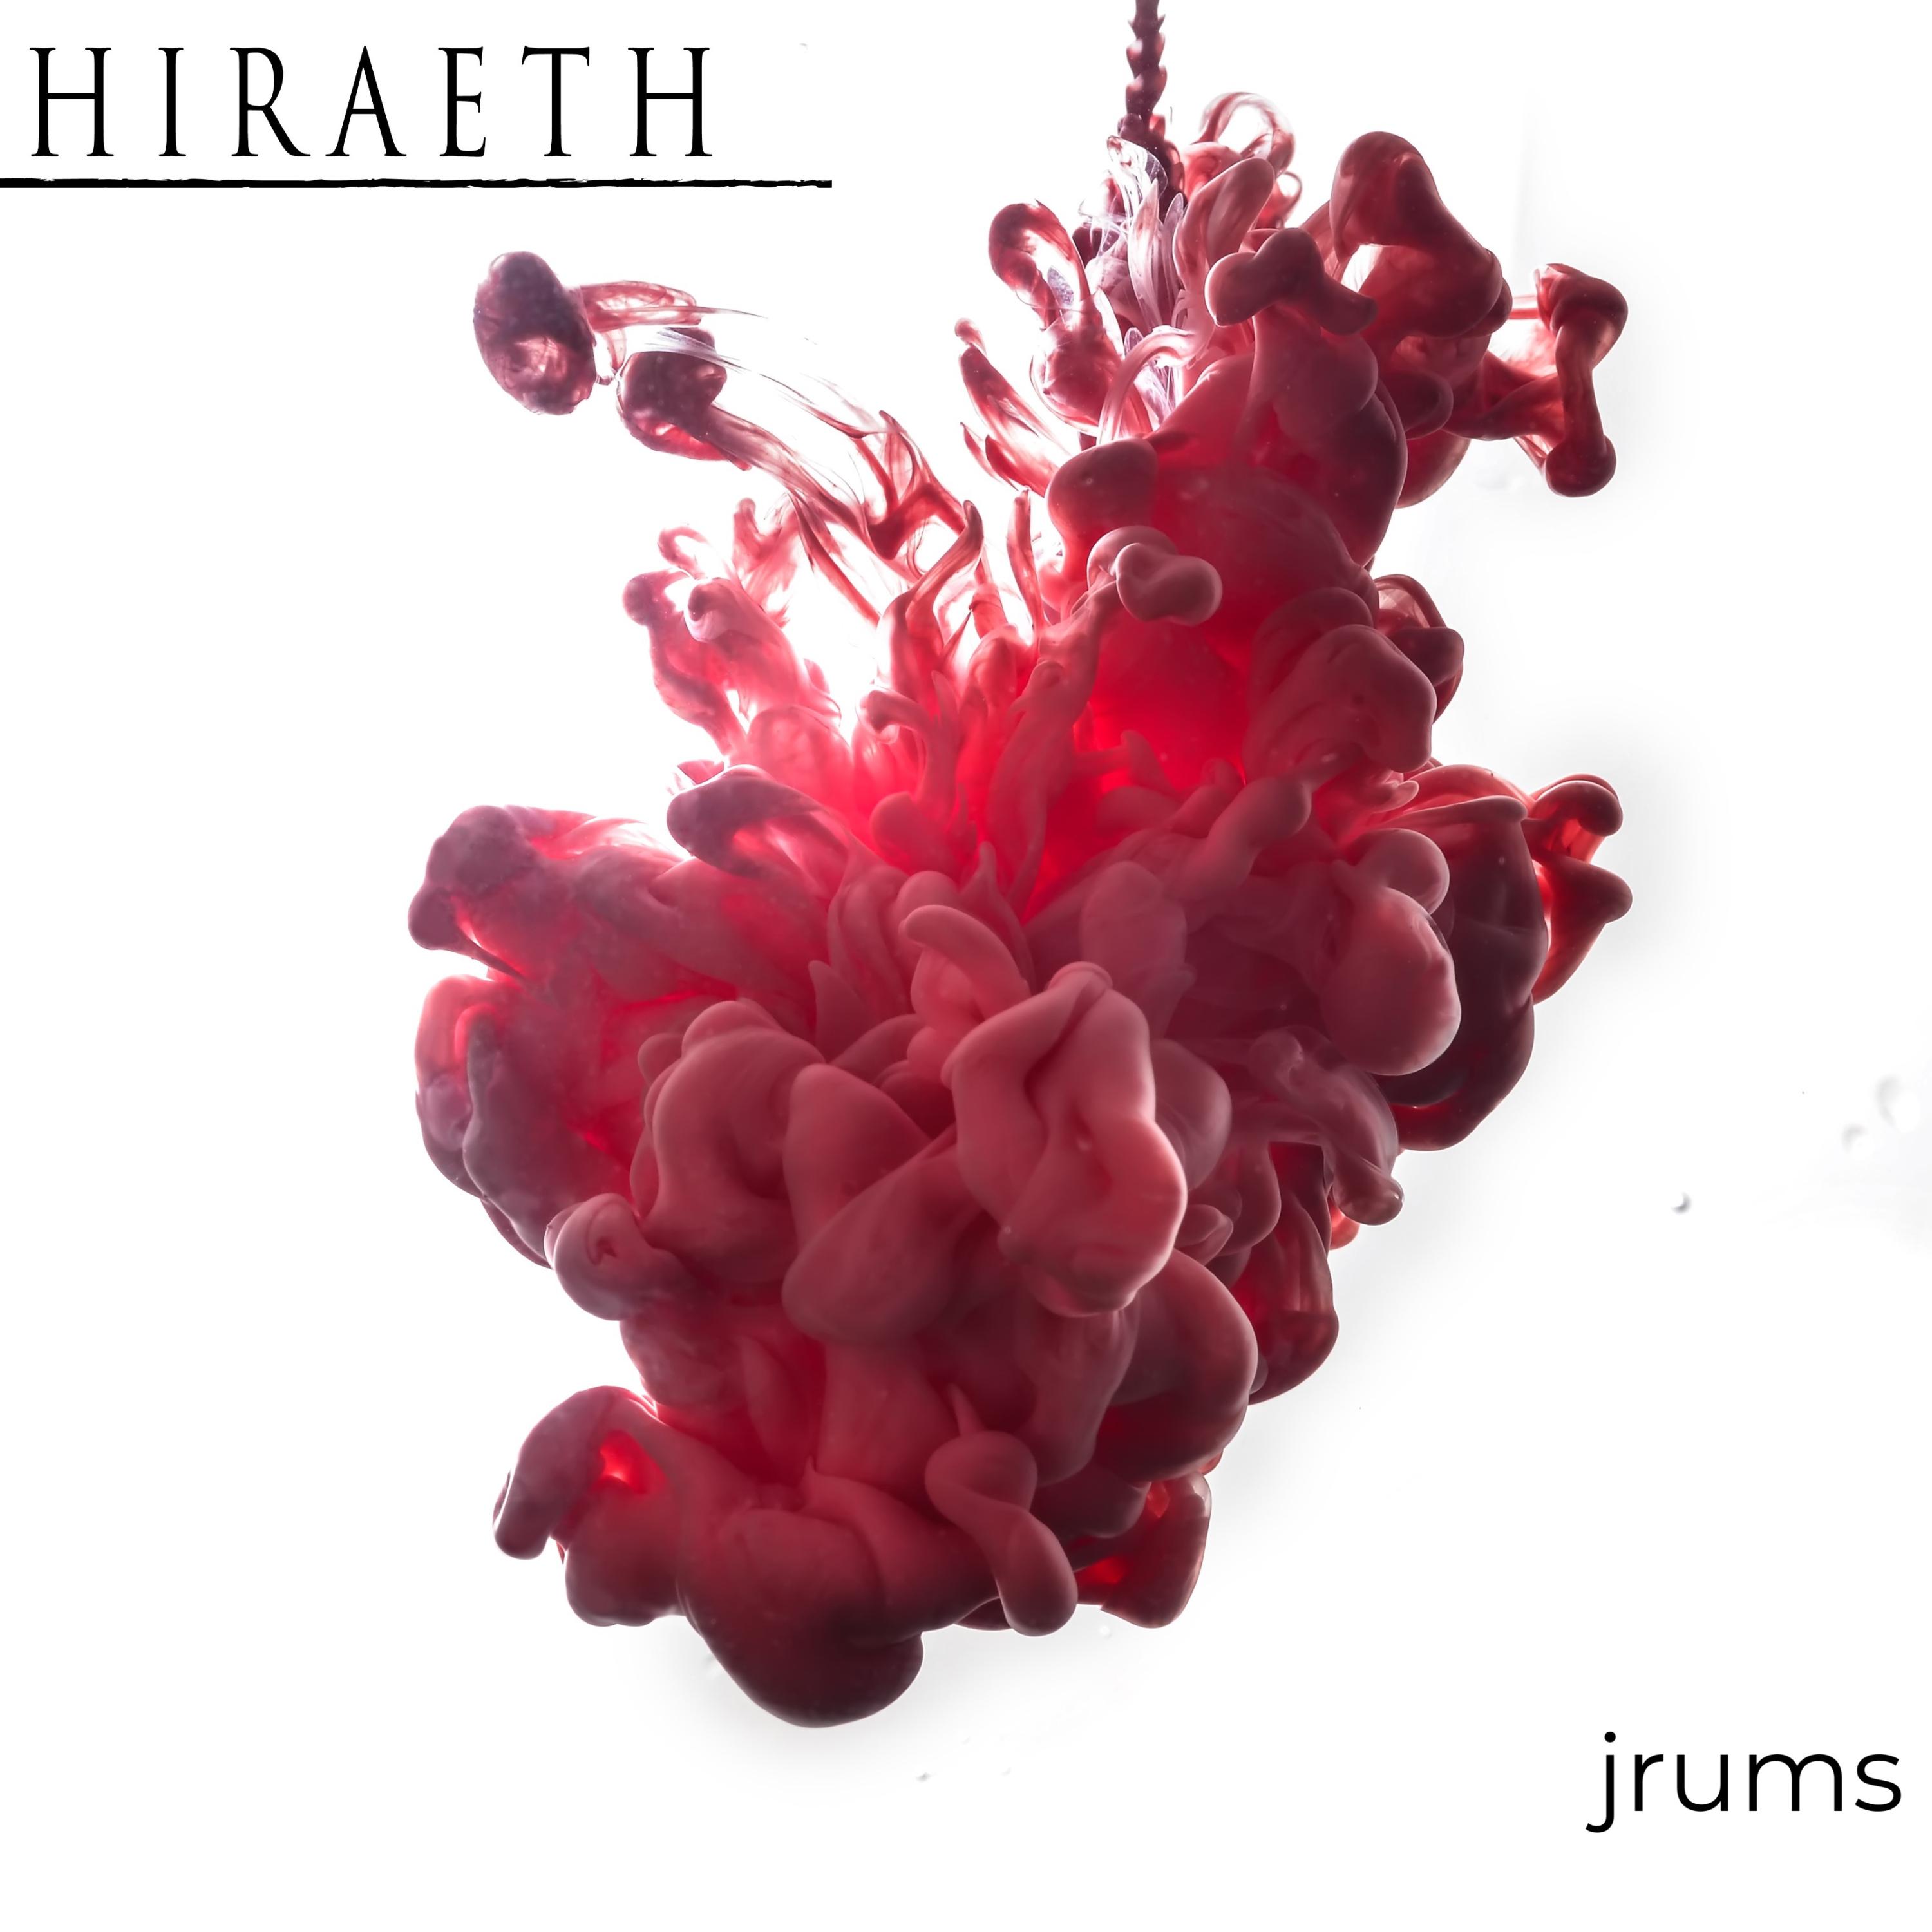 Hiraeth - The Enemy